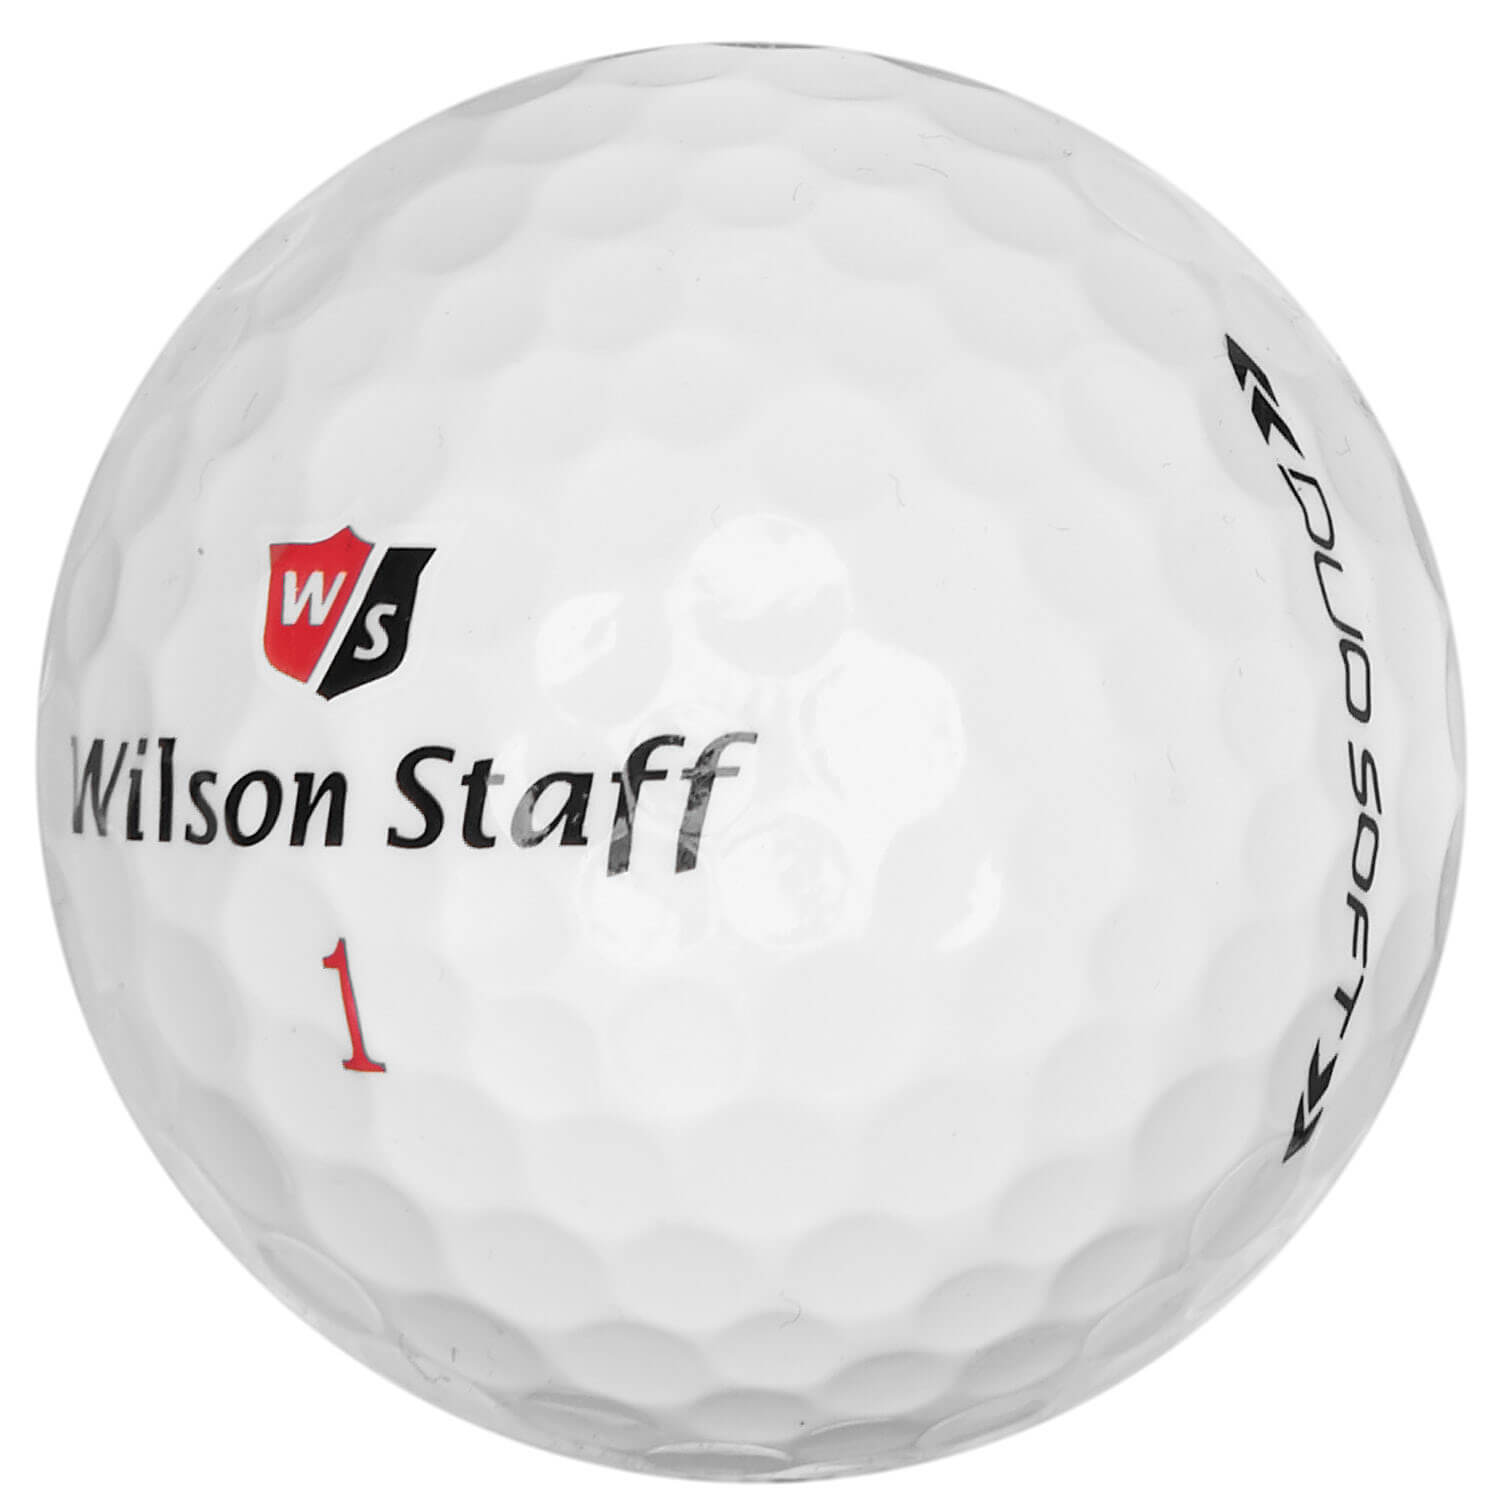 Wilson Staff DUO Soft Golfbälle, white